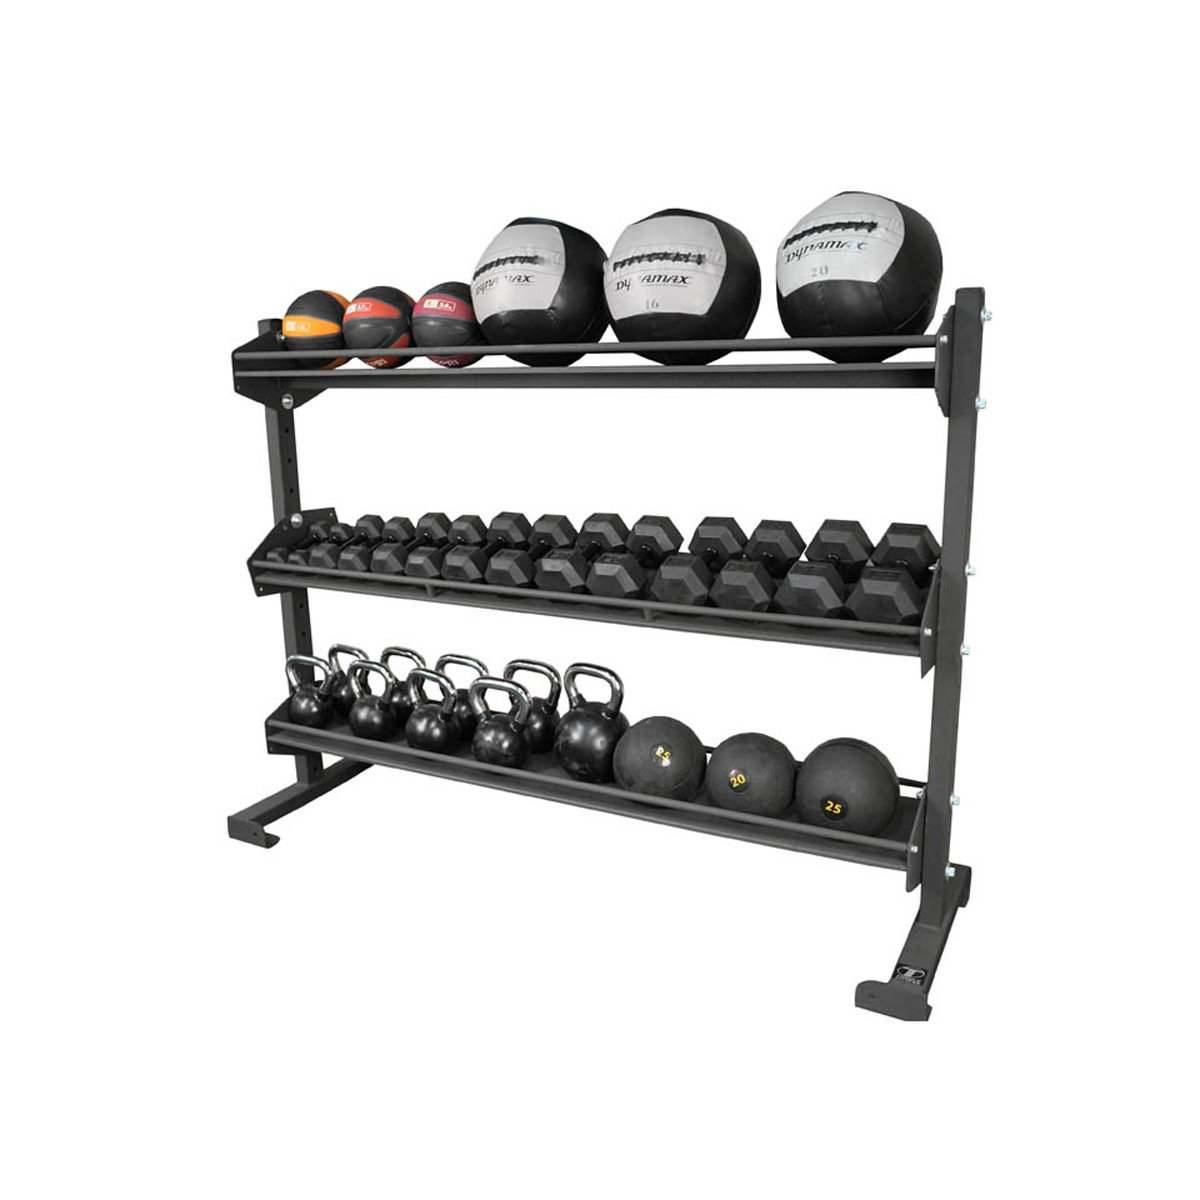 6 Foot Universal Storage Rack – Weight Room Equipment